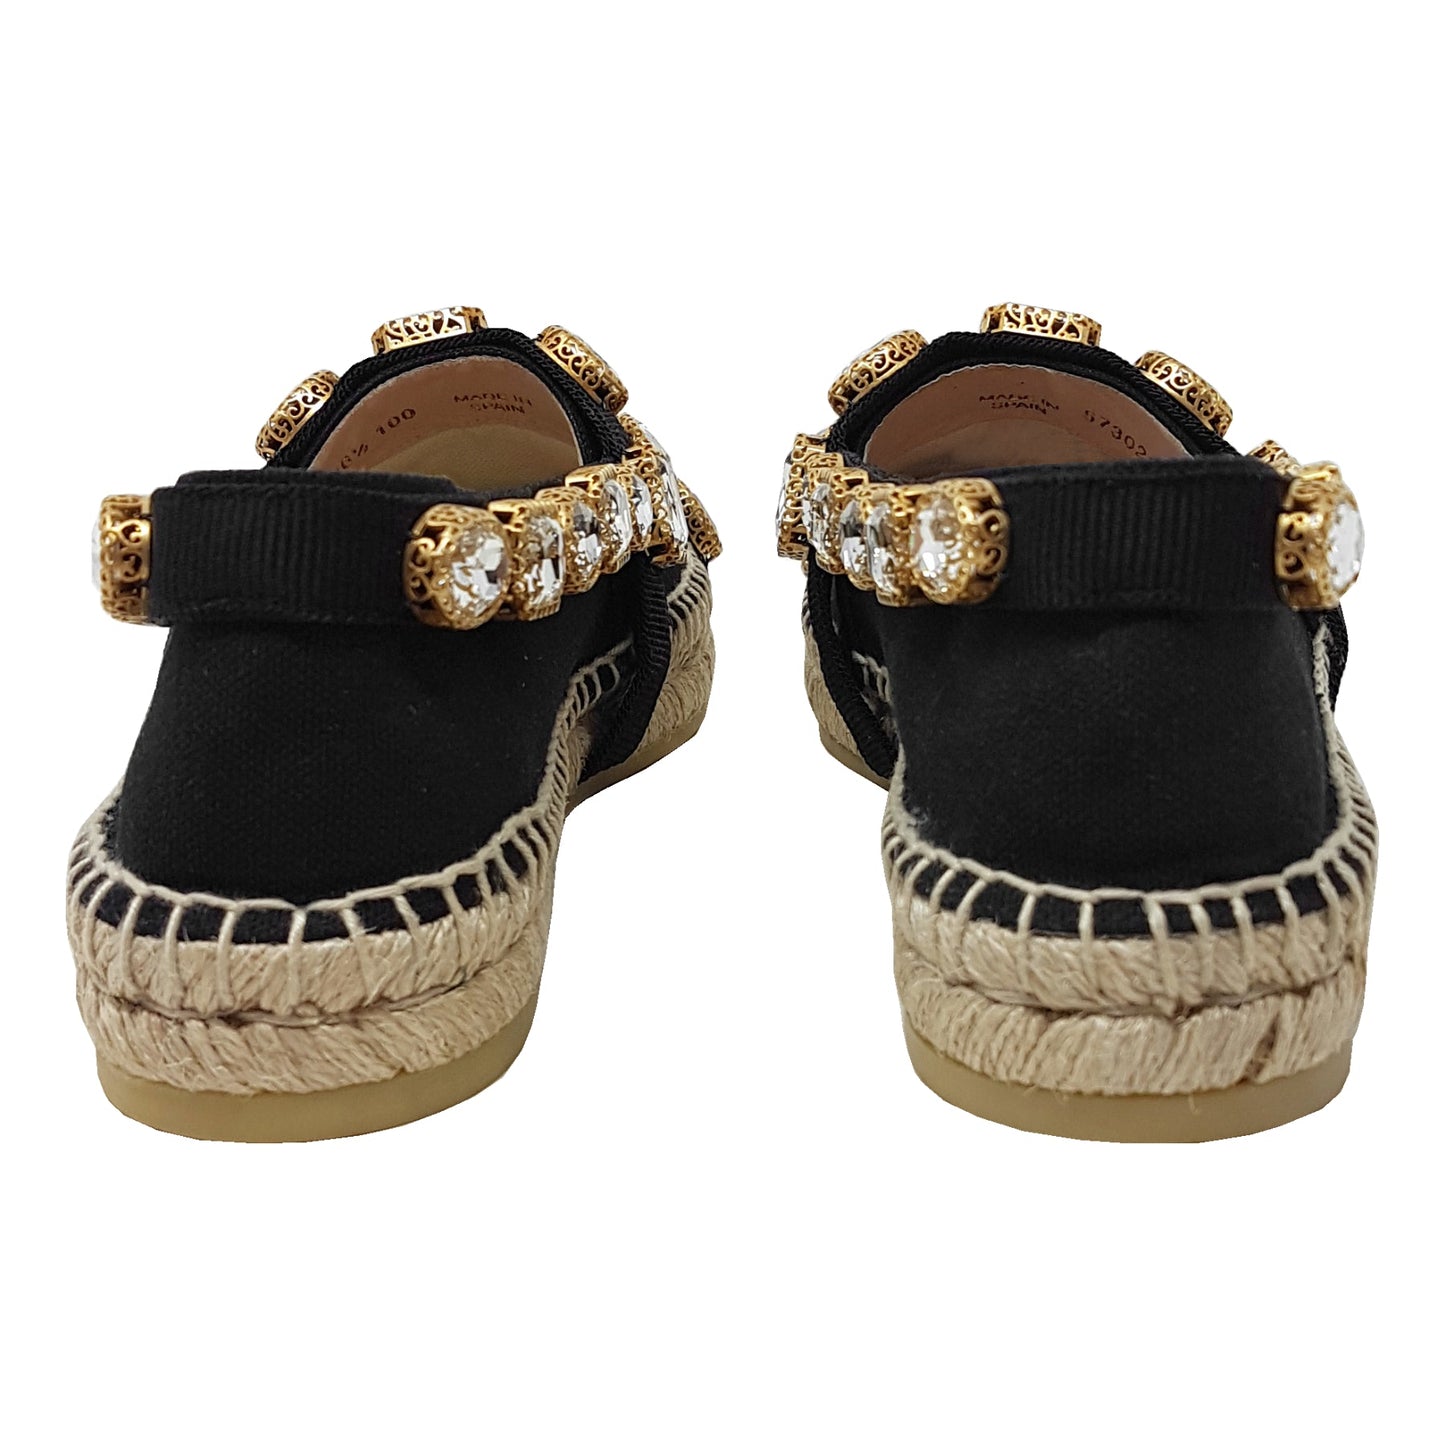 Gucci Shoes Black Fabric Crystal Embellished Round Toe Pepita Espadrille Flats Size EU 36.5